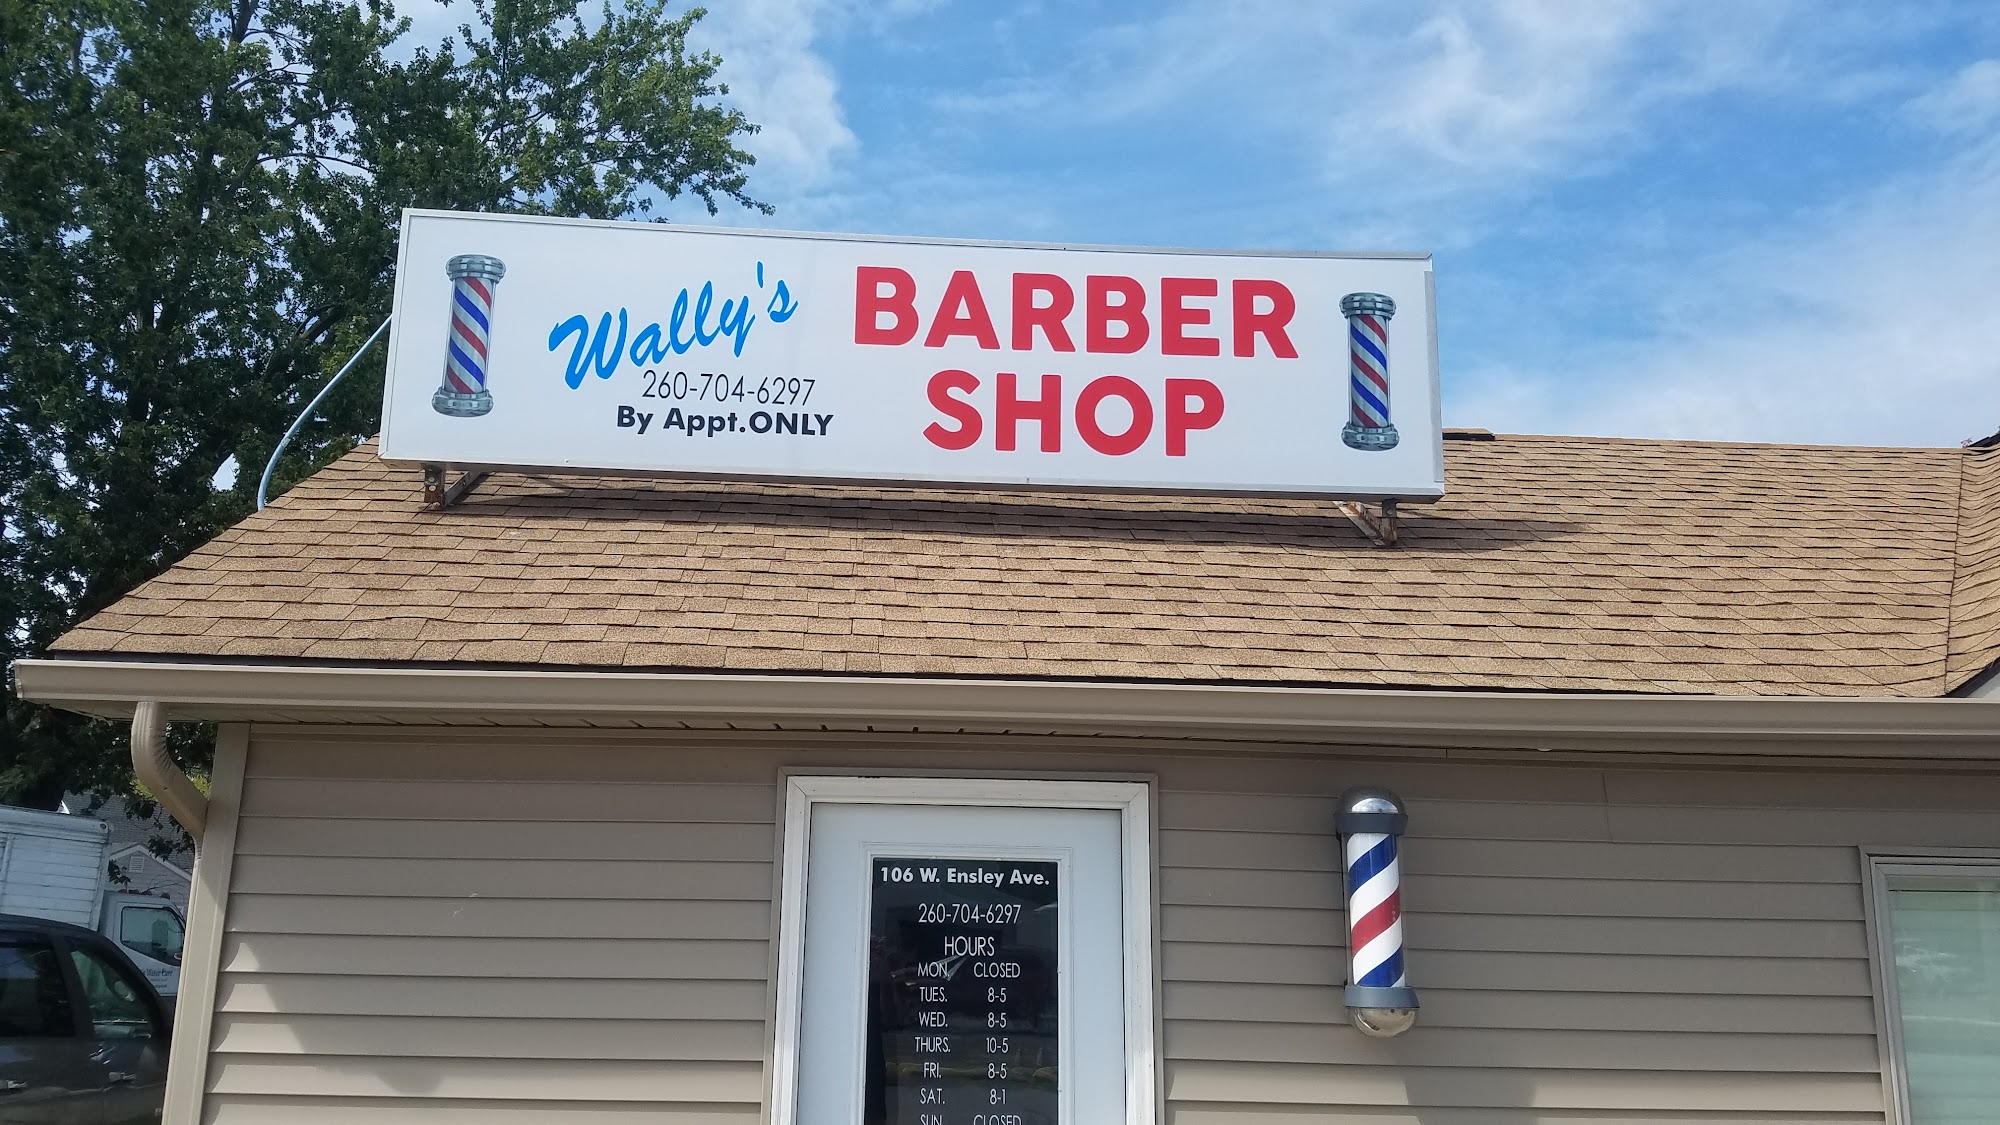 Wally’s Barber Shop 106 W Ensley Ave, Auburn Indiana 46706